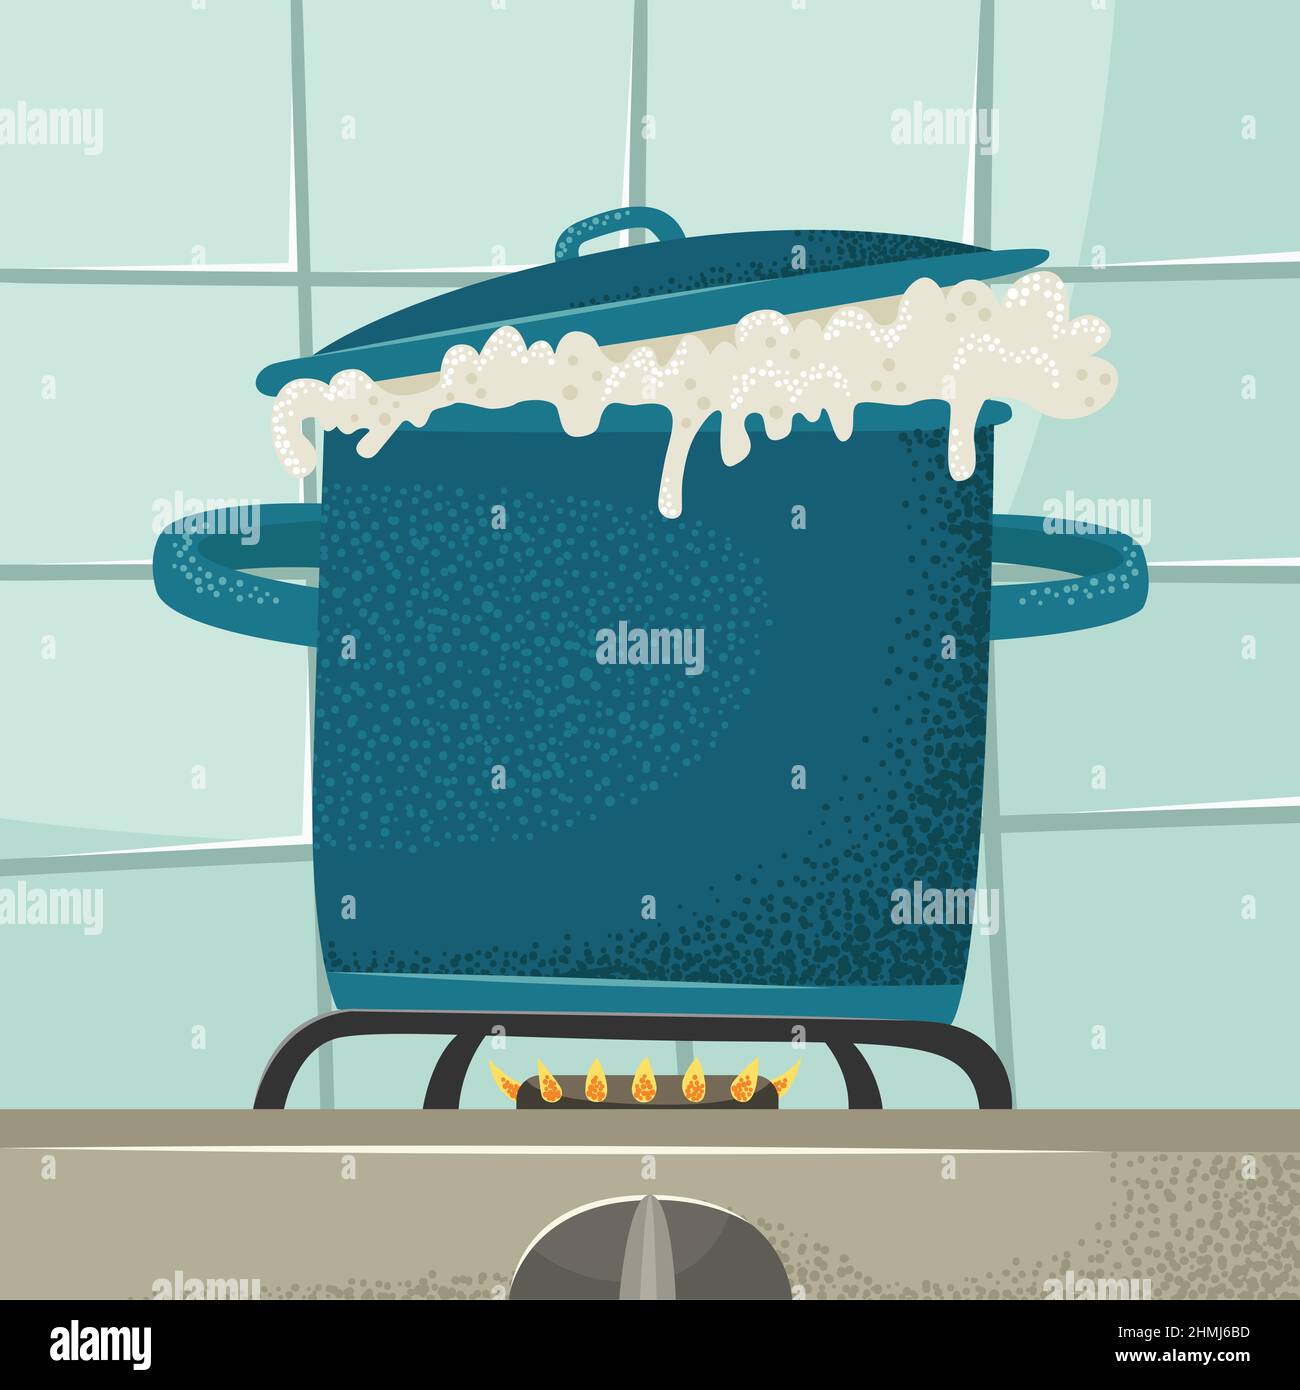 https://c8.alamy.com/comp/2HMJ6BD/vector-illustration-of-a-pan-with-boiling-liquid-on-the-hob-of-a-kitchen-stove-2HMJ6BD.jpg